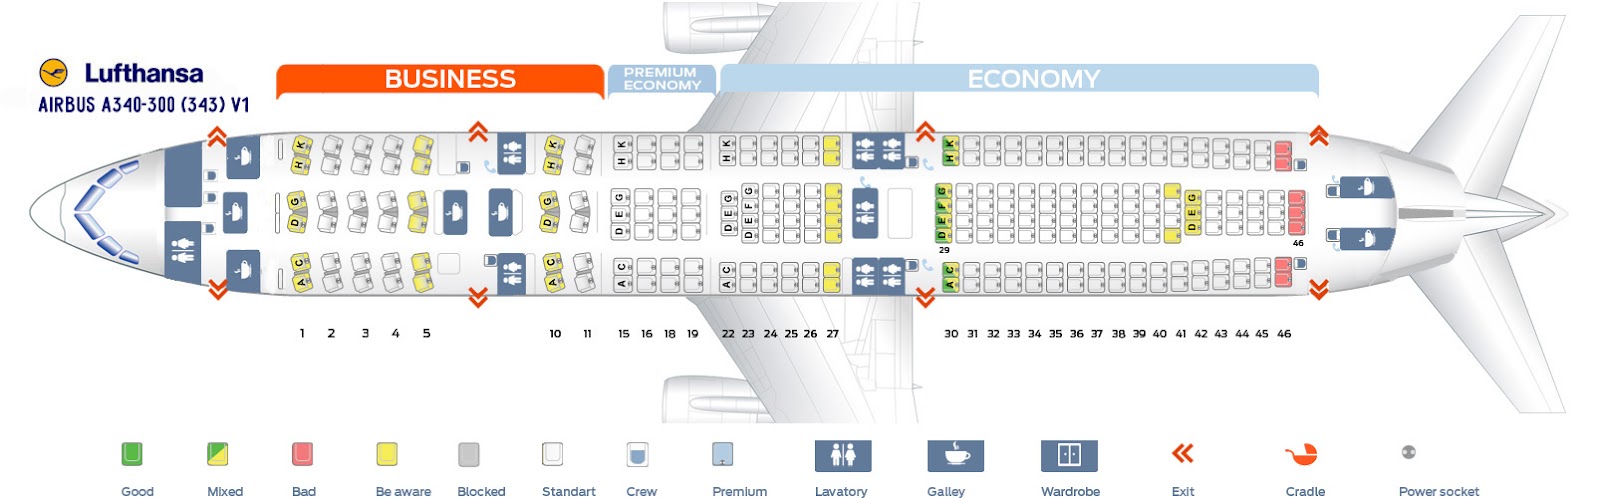 Lufthansa Seat Map 